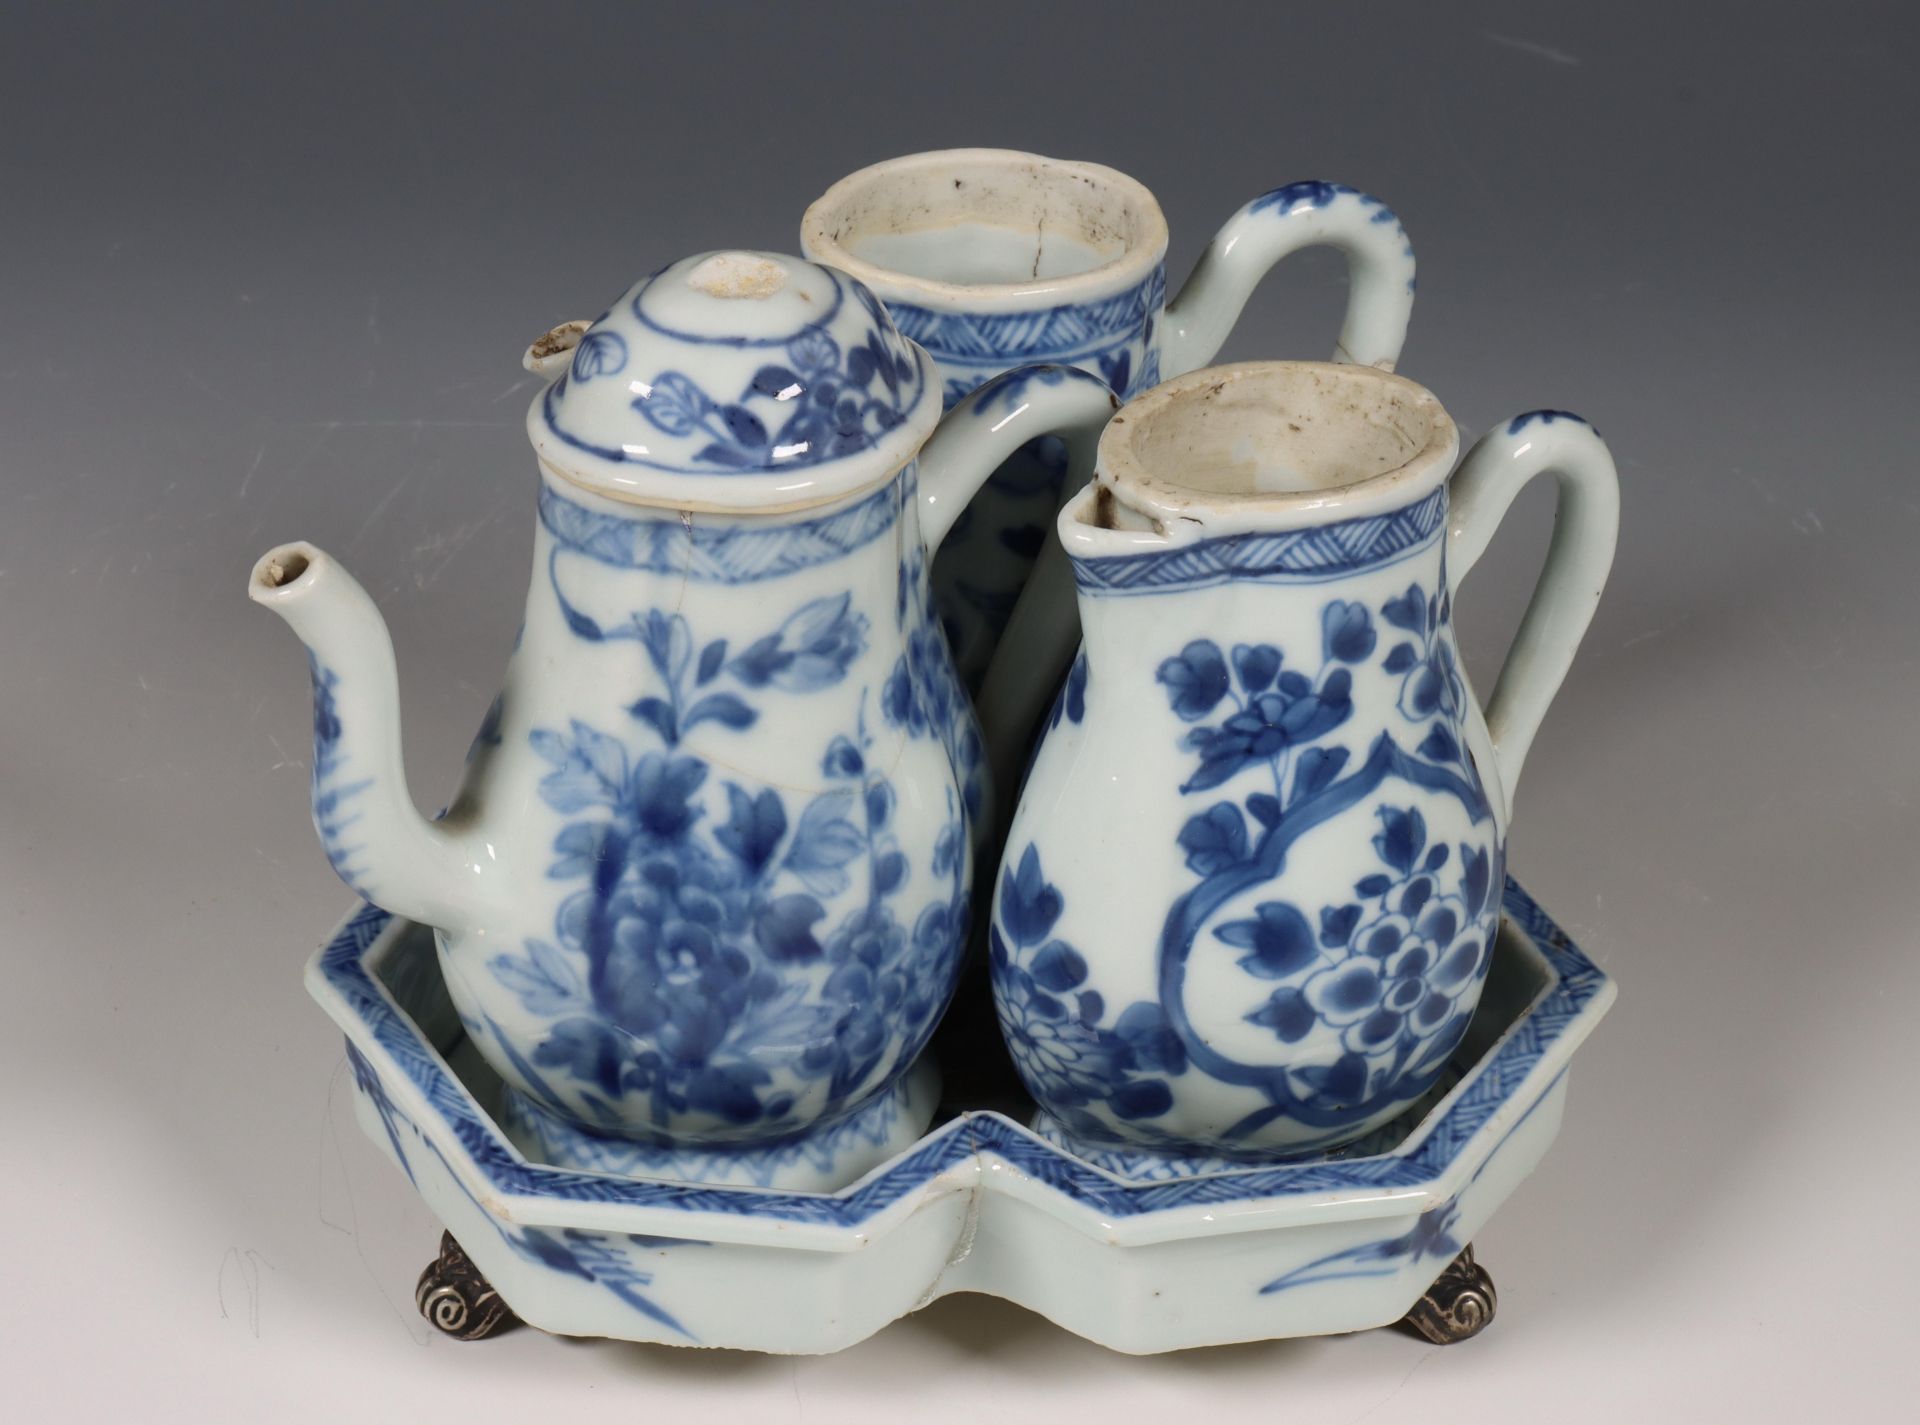 China, samengesteld blauw-wit porseleinen olie- en azijnstel, 18e eeuw,